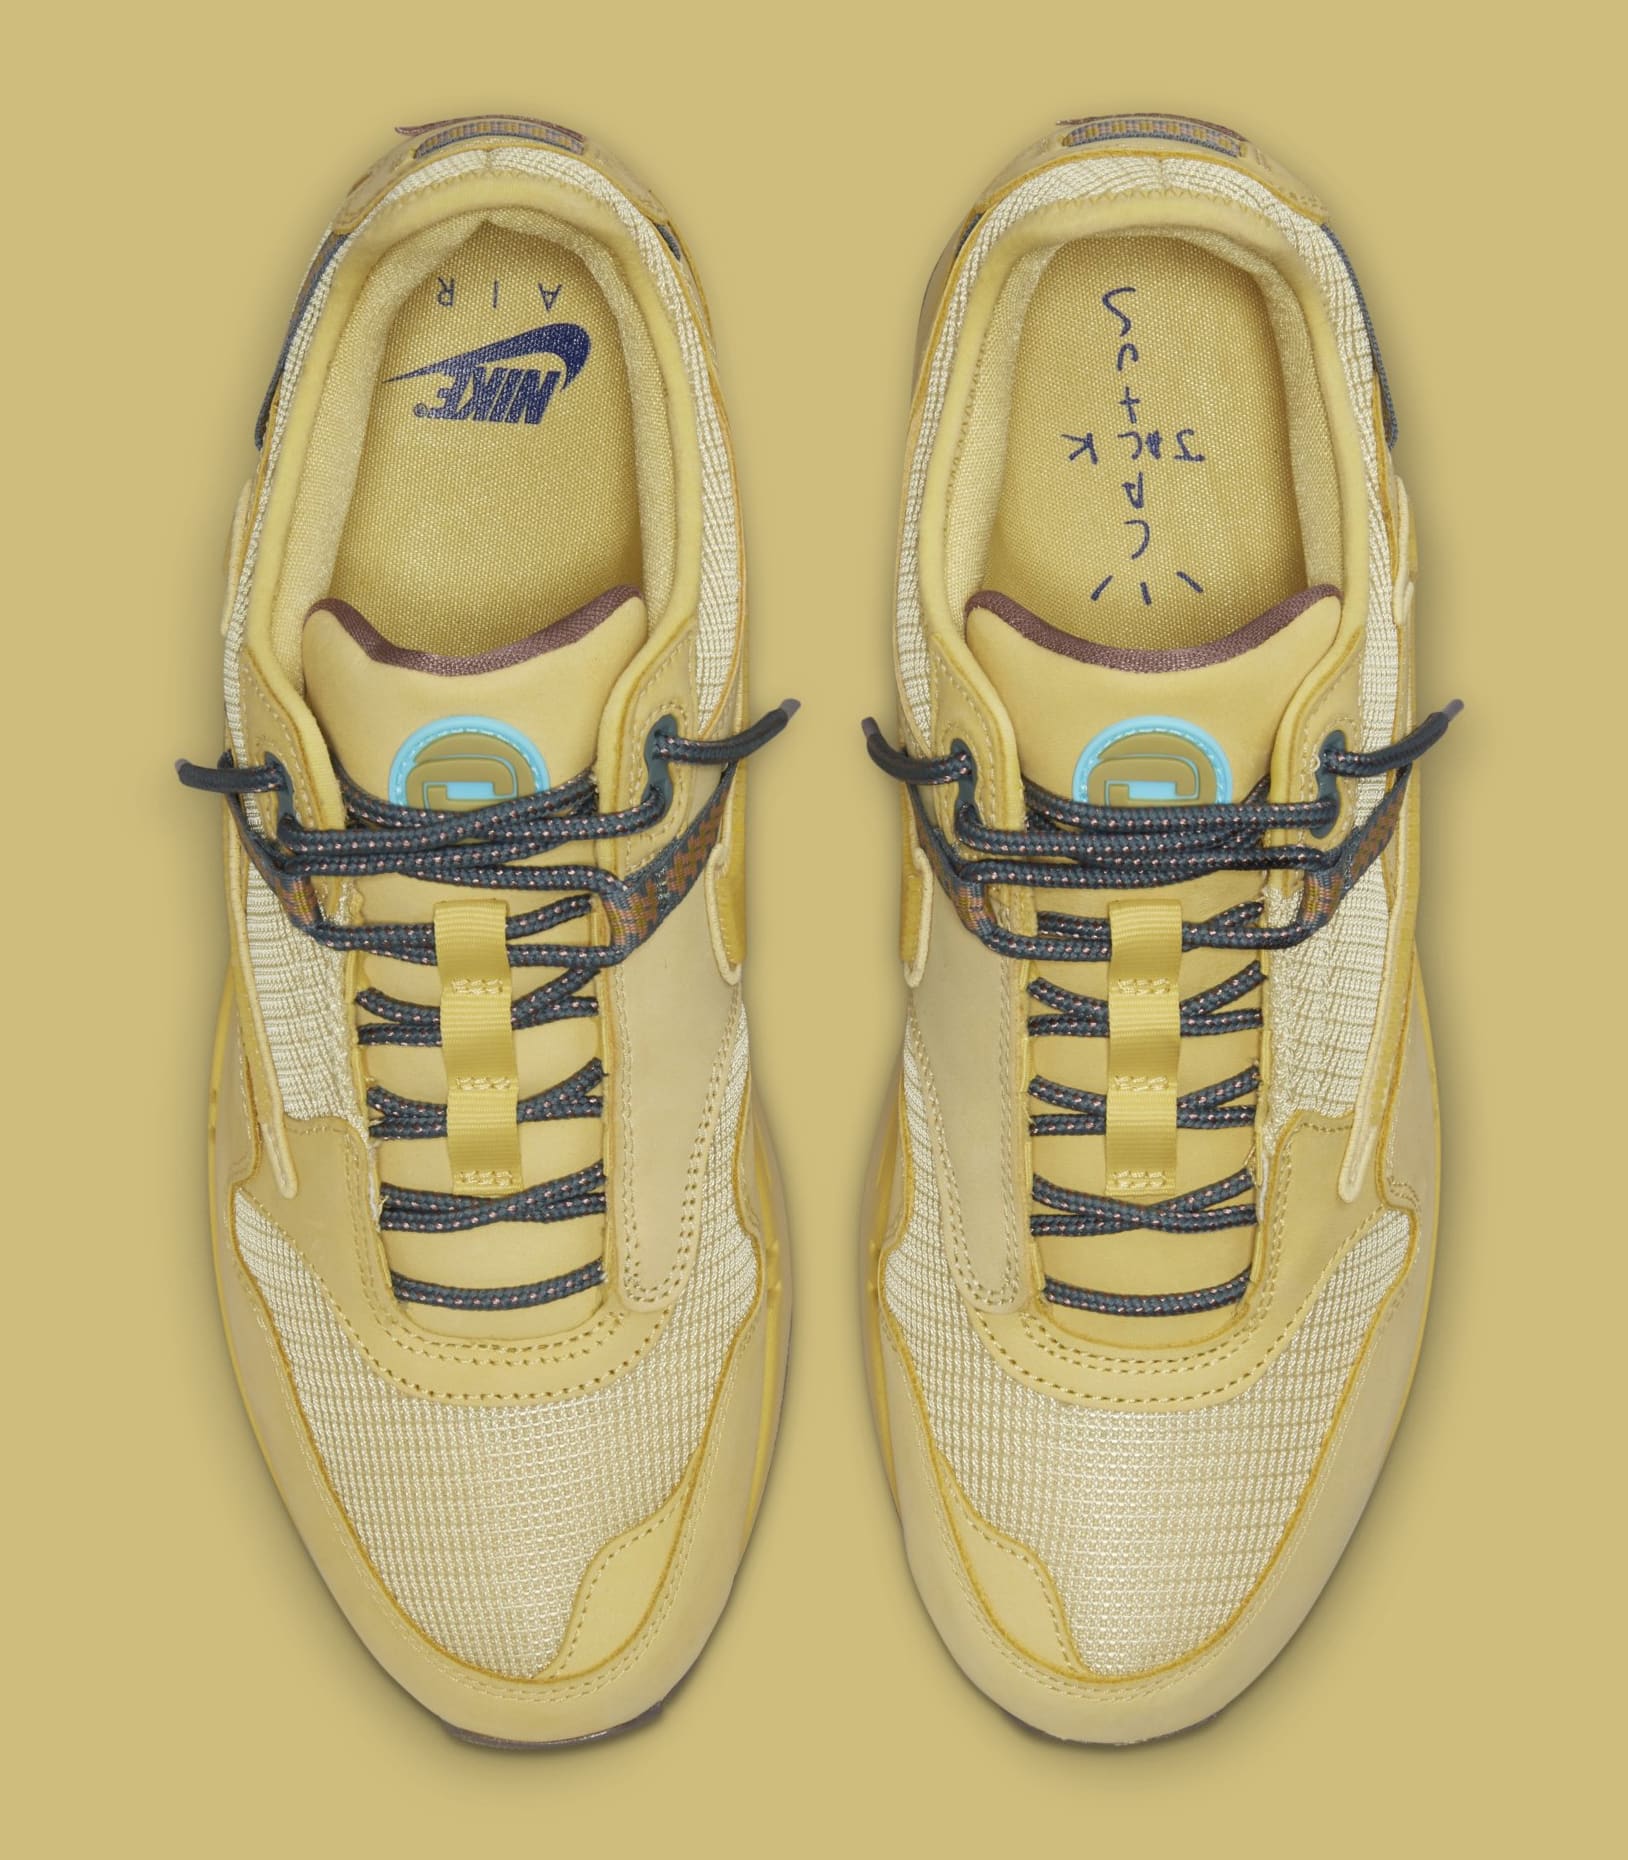 Travis Scott x Nike Air Max 1 Collaboration Release Date | Sole 